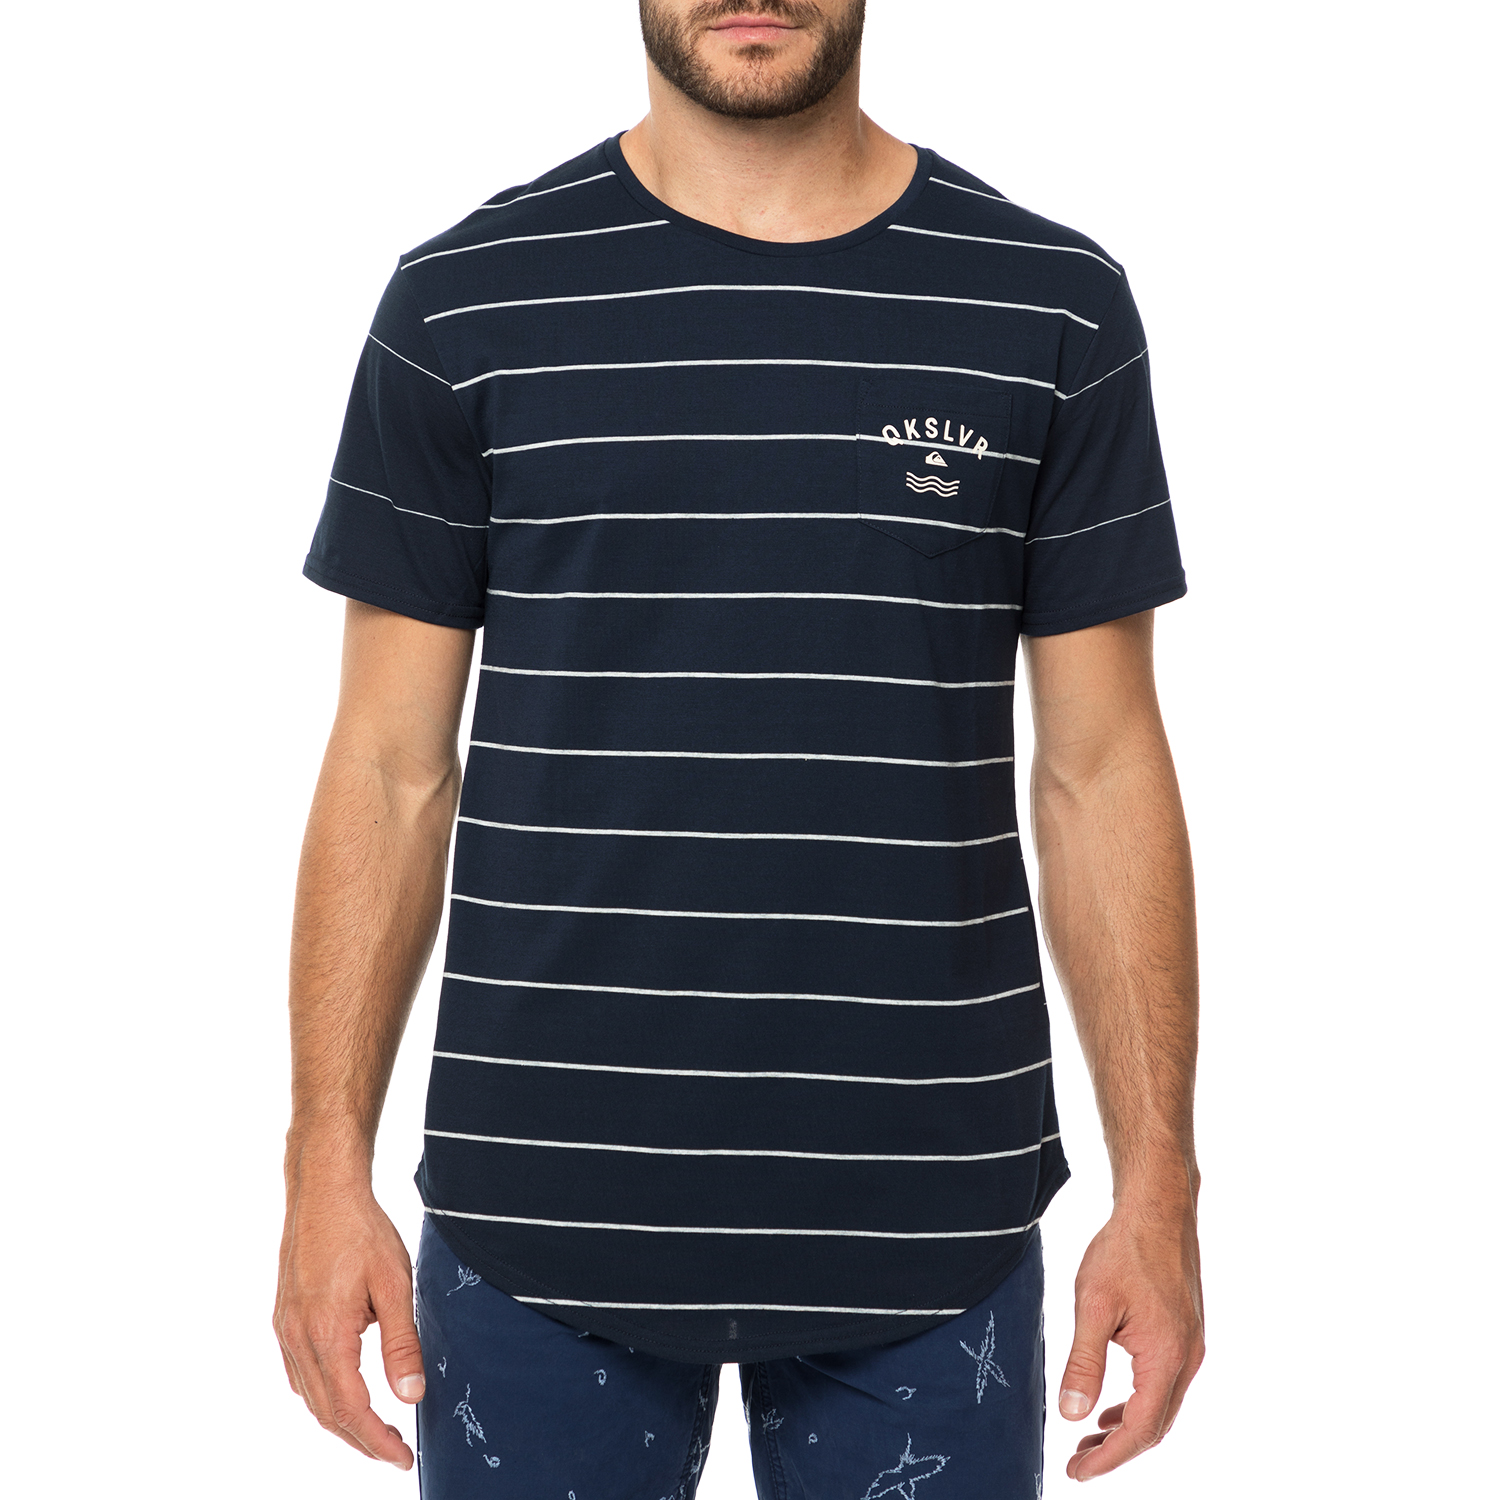 QUIKSILVER - Ανδρική κοντομάνικη μπλούζα QUIKSILVER CAPERROCKS μπλε με ρίγες